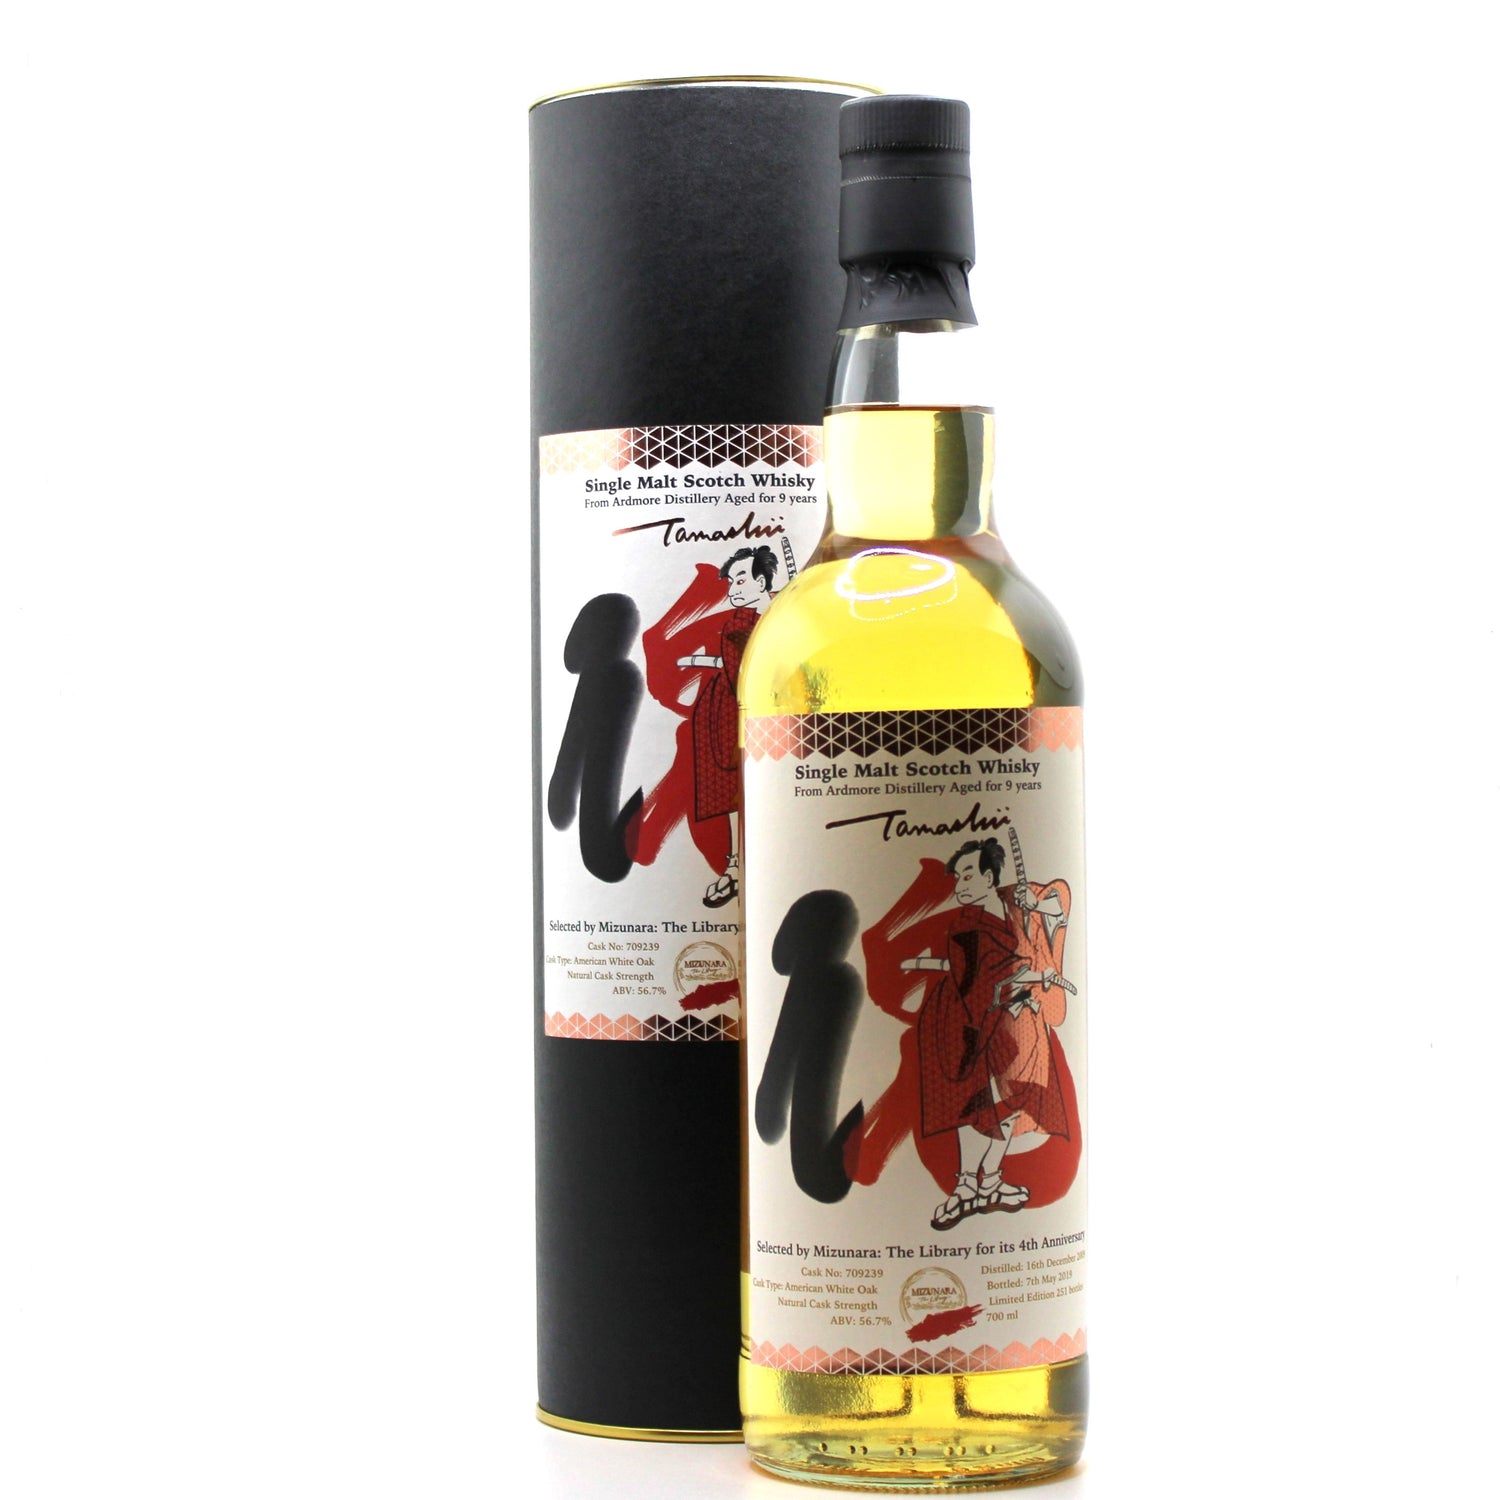 Ardmore "Tamashii" Single Malt Scotch Whisky 9 Years Old